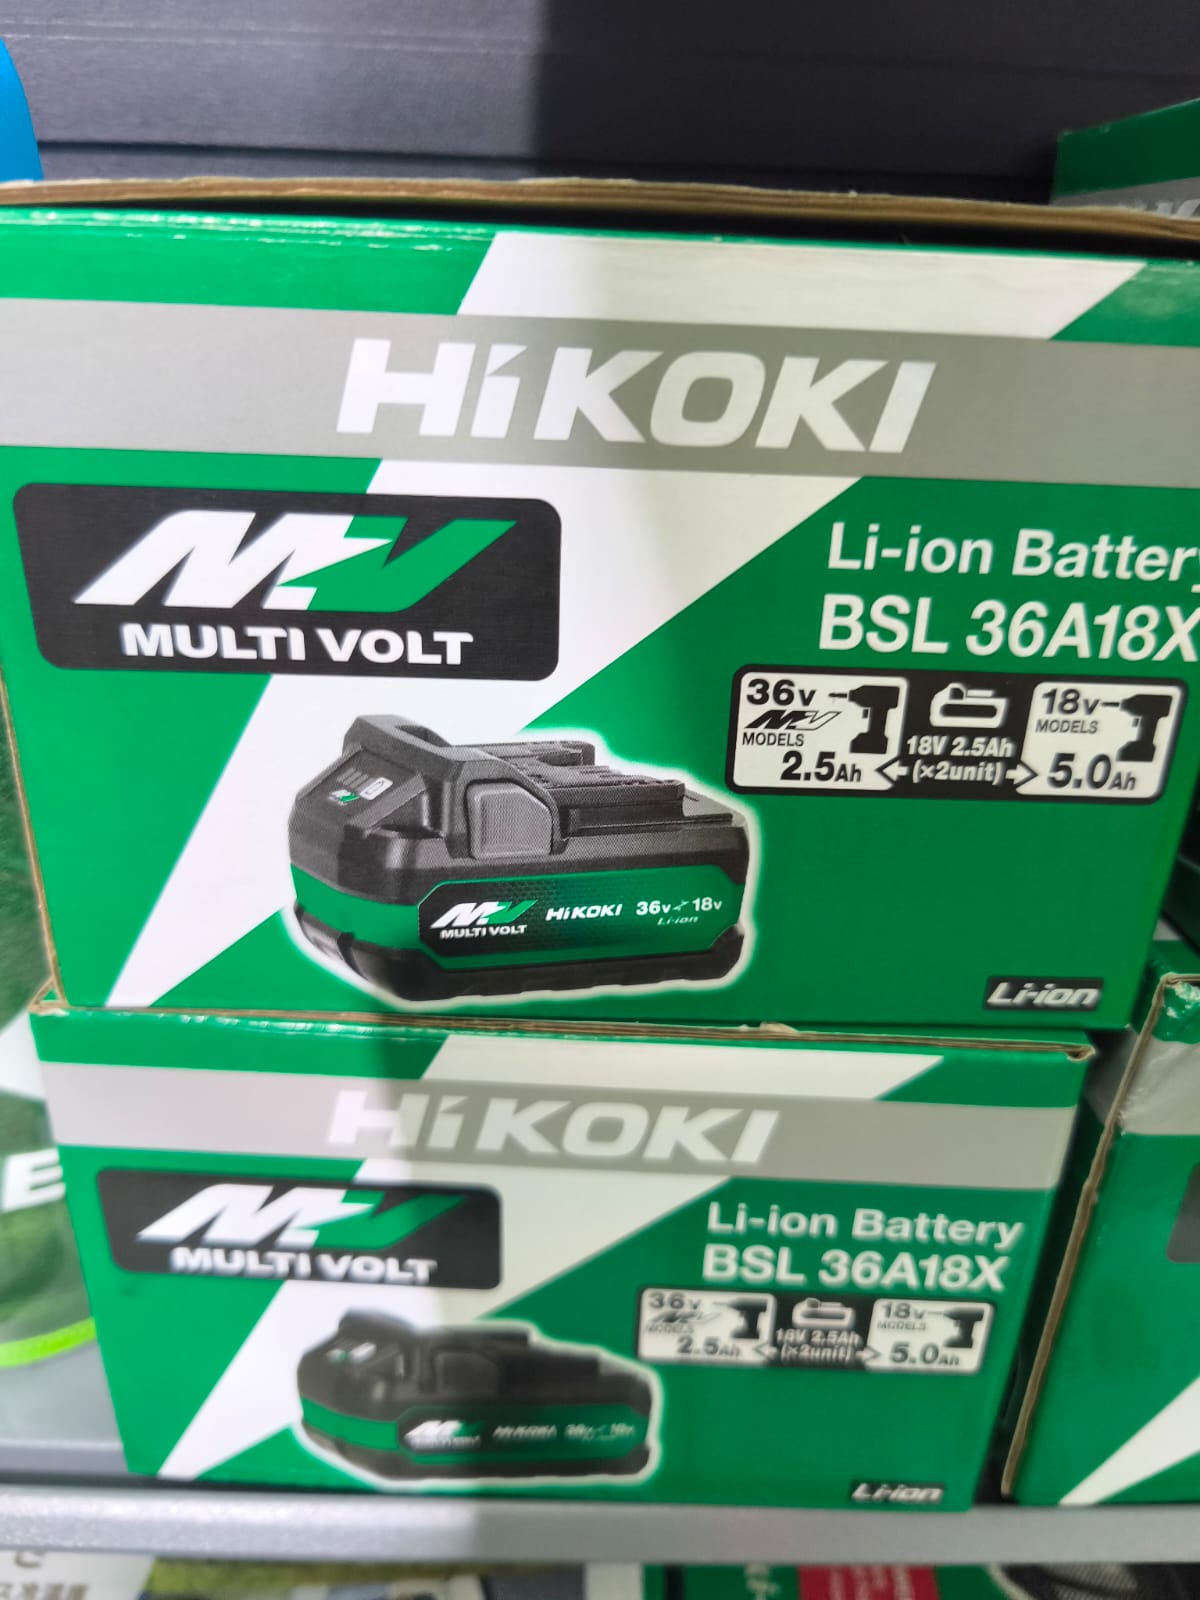 HIKOKI BSL36A18X 36V 多伏特電池 36V 2.5AH / 18V - 5.0AH 鋰離子 HIKOKI